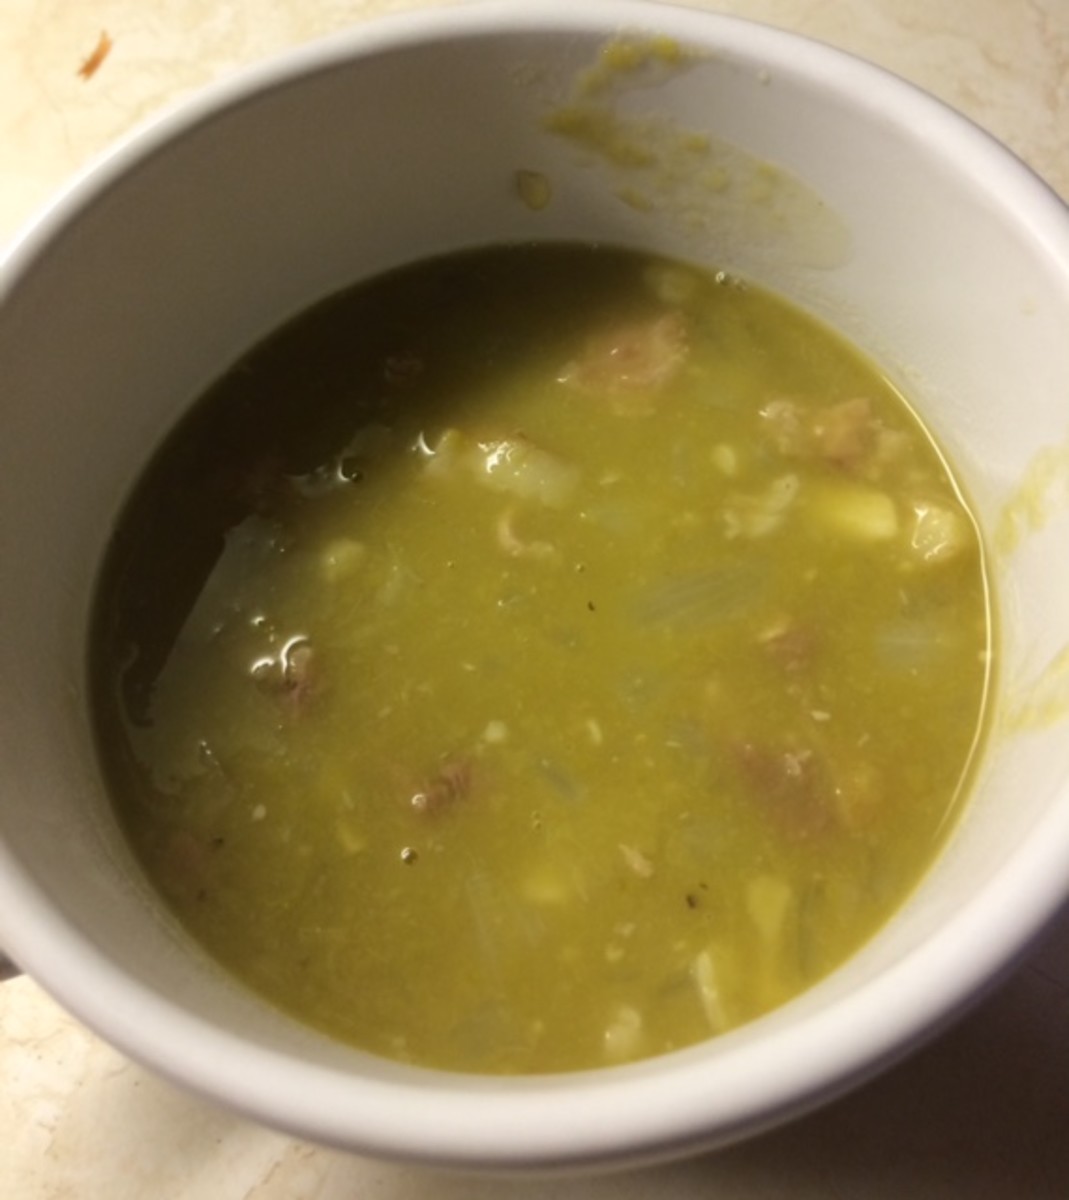 Split pea soup using green split peas